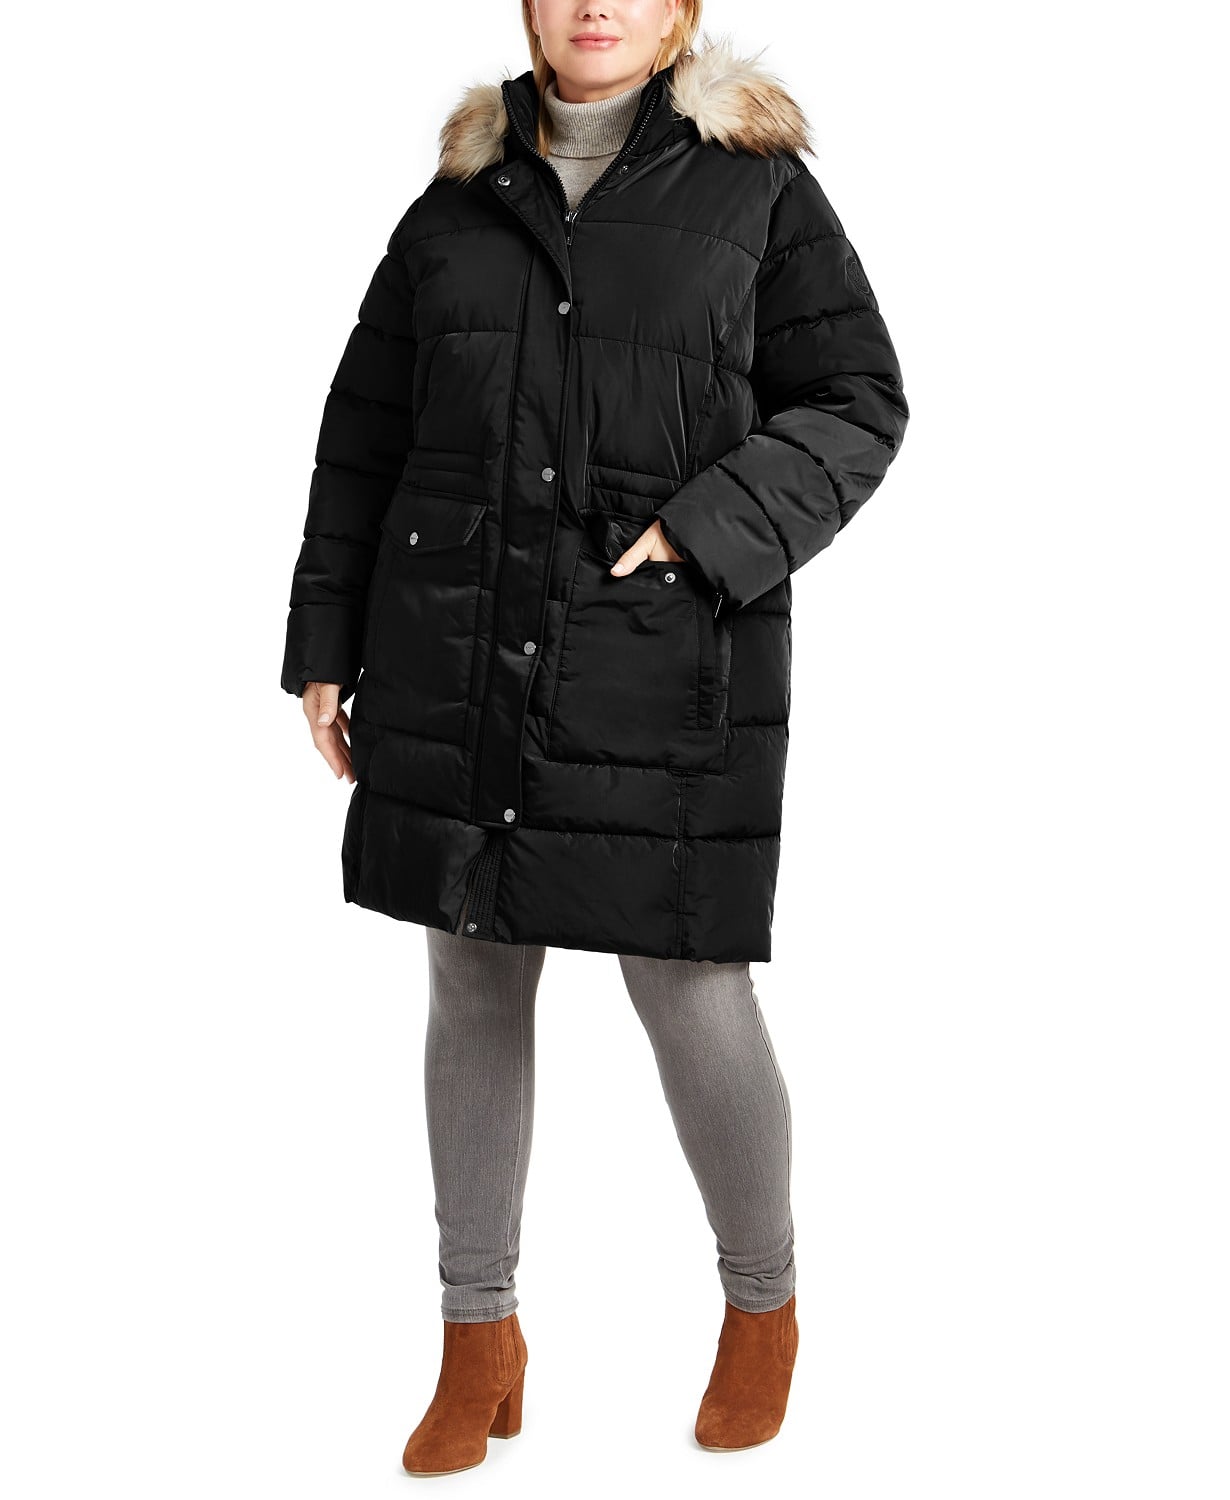 Plus Size Winter Coats Macys Online | bellvalefarms.com